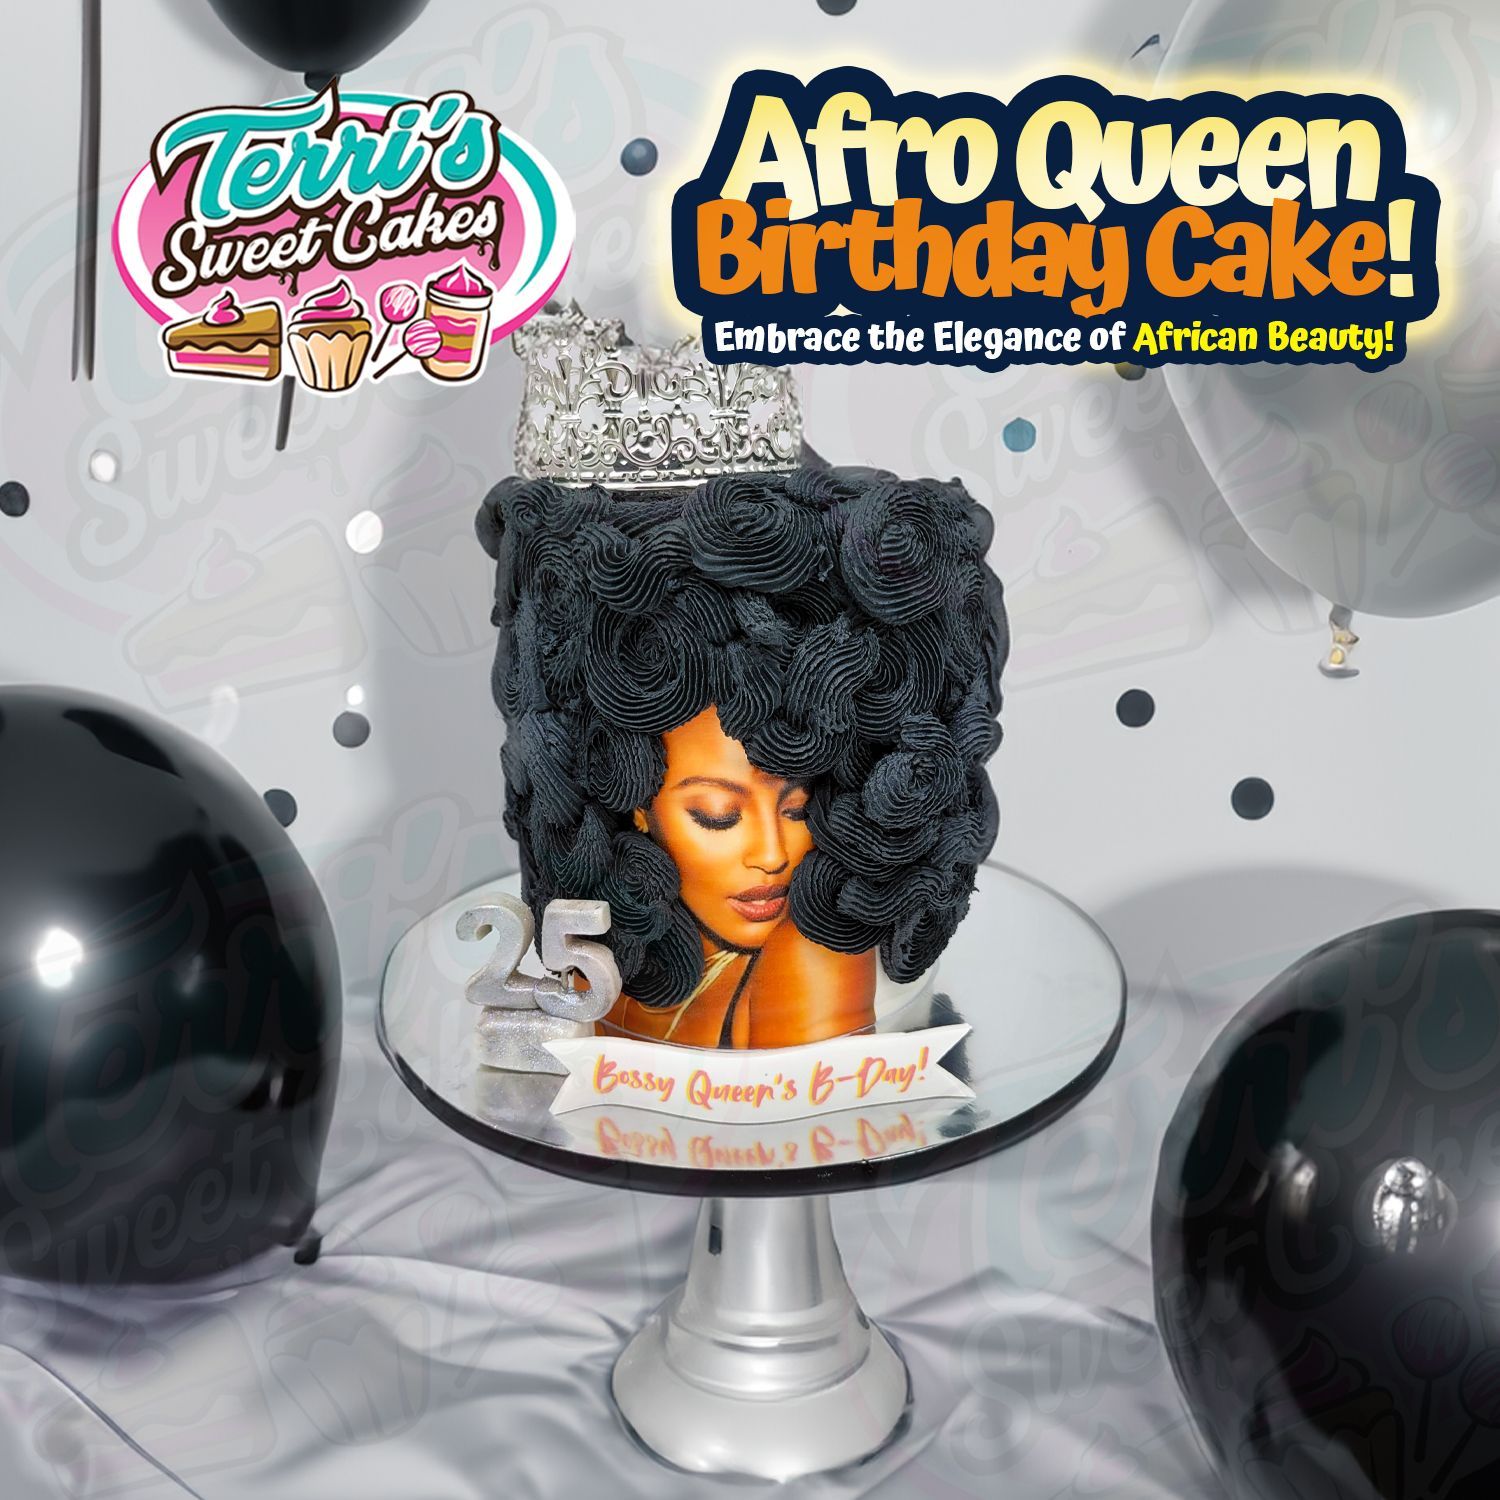 Afro Queen Birthday Cake by Terri's Sweet Cakes!